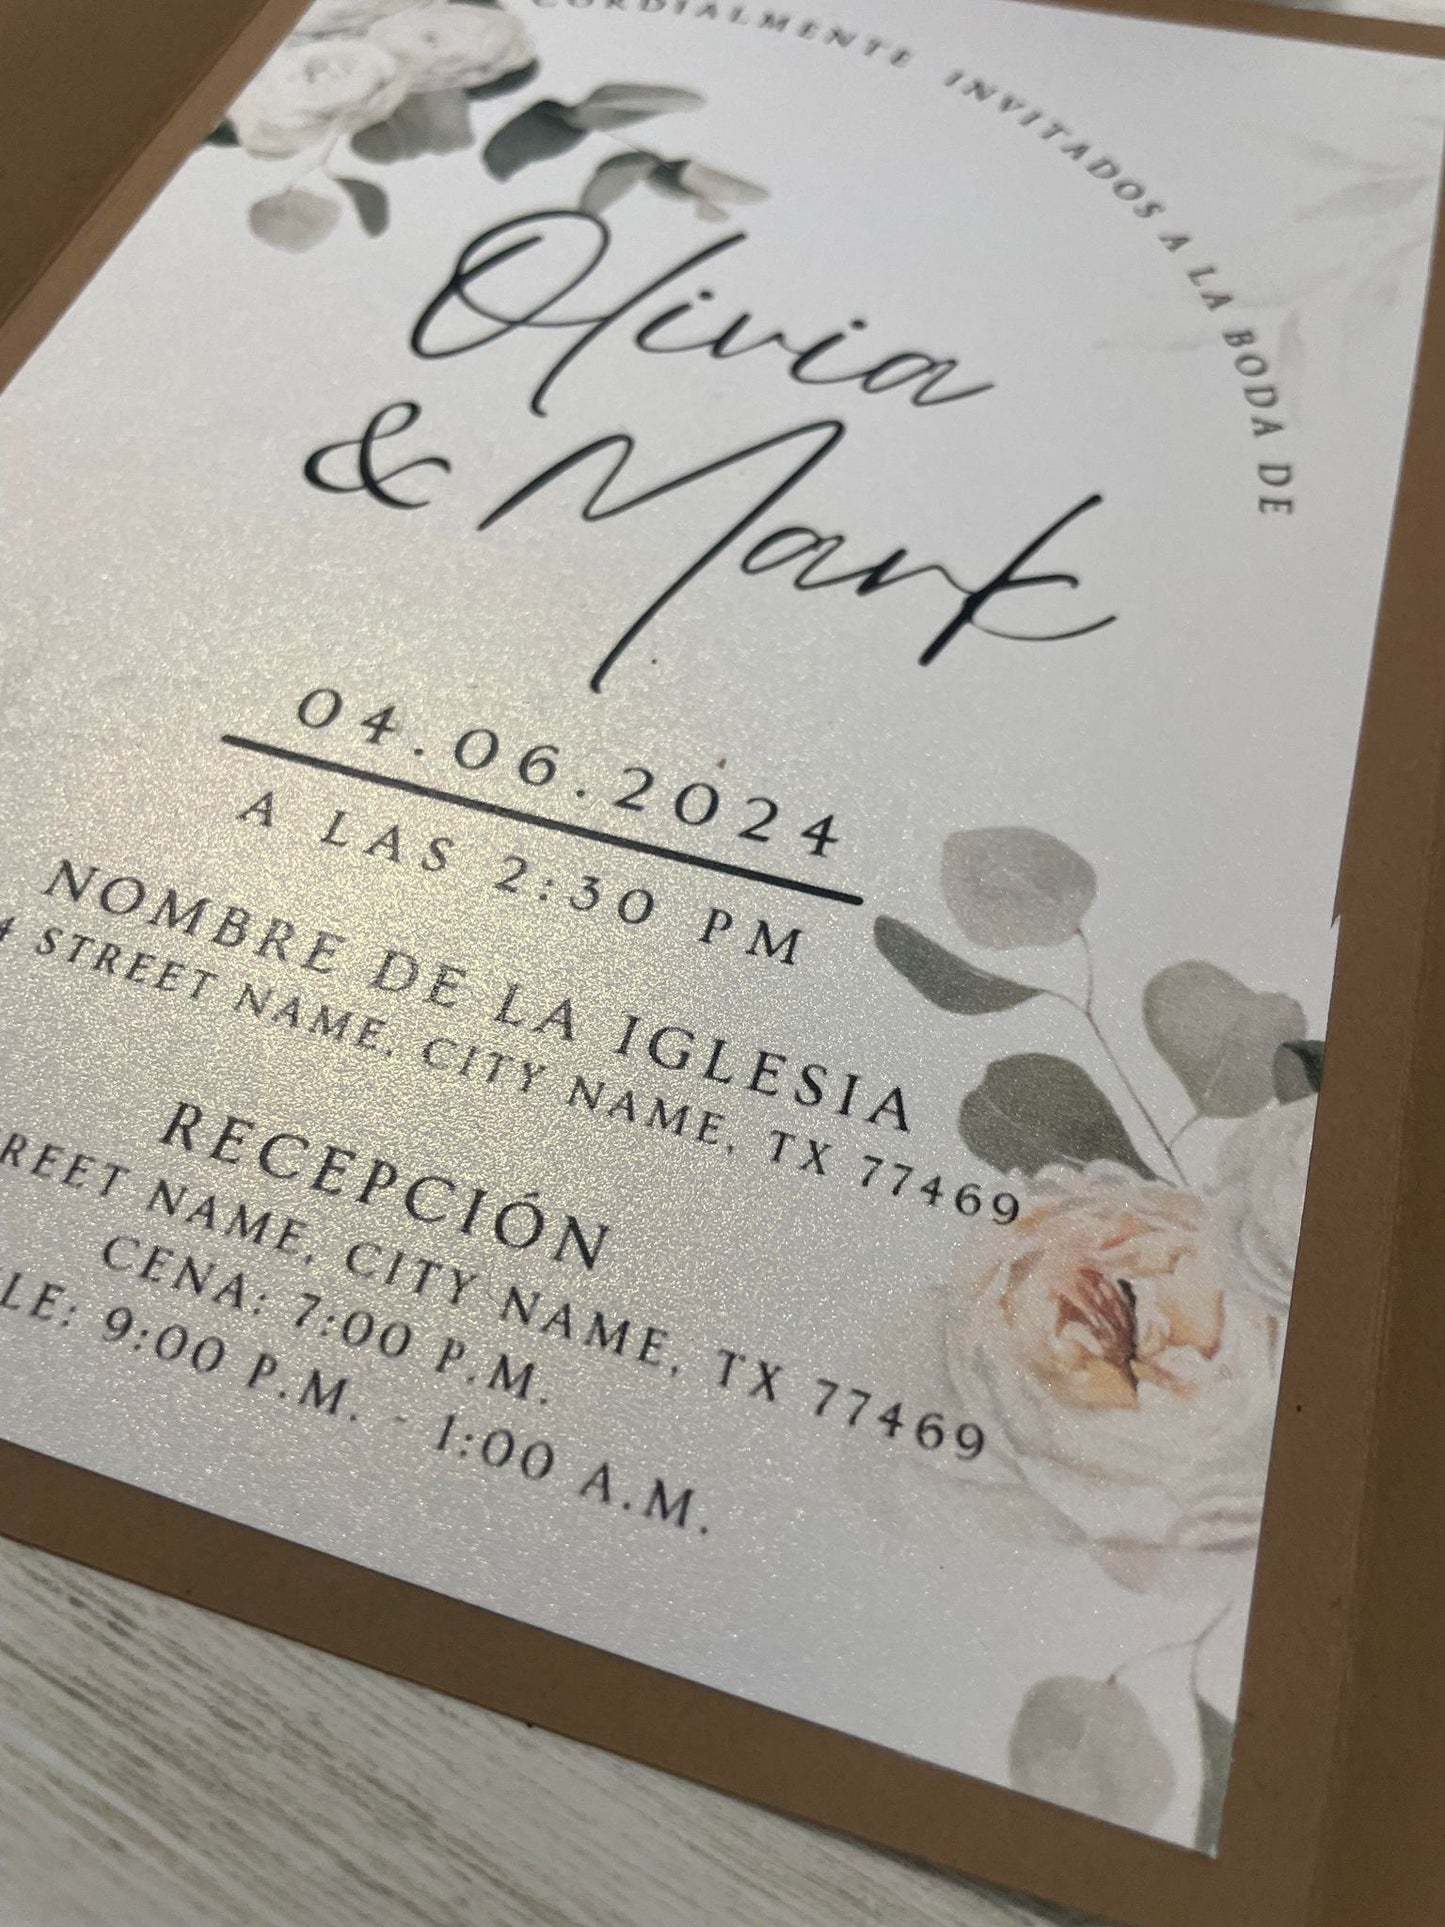 Rustic Floral Wedding Invitation